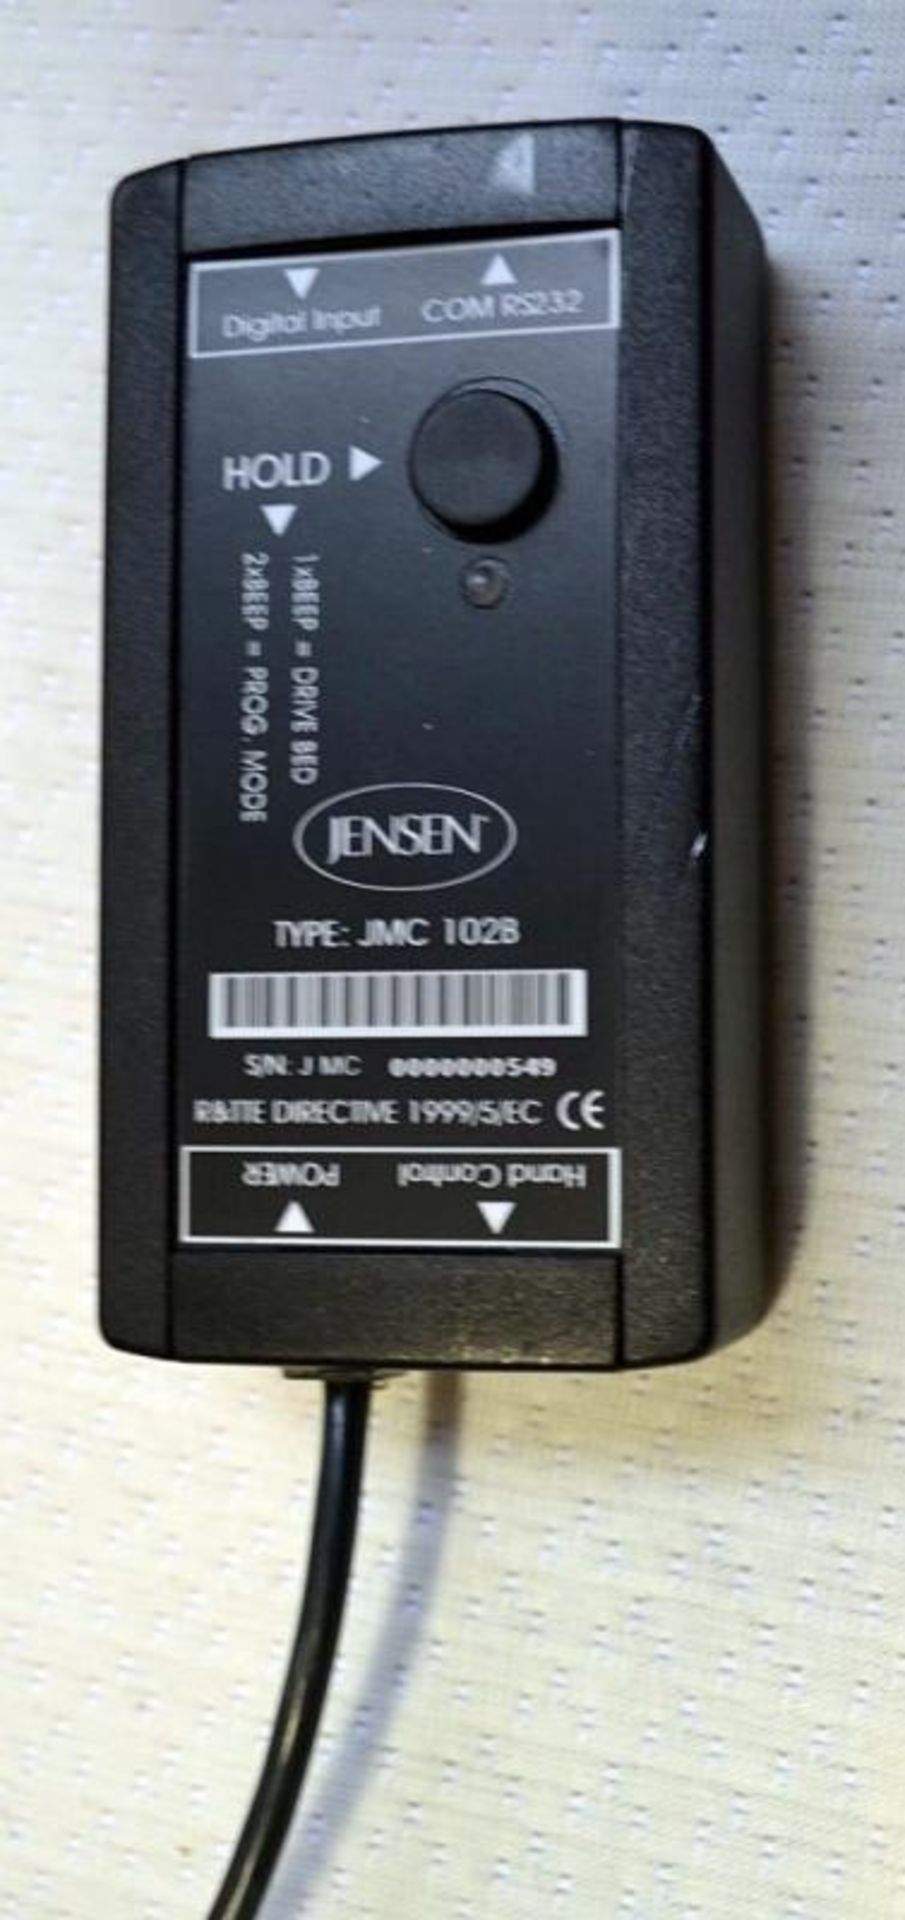 1 x Jensen EDEN Adjustable Superking Bed Base - W180 x L210 x H34cm - Colour: Black - CL087 - Ref: - Image 8 of 13